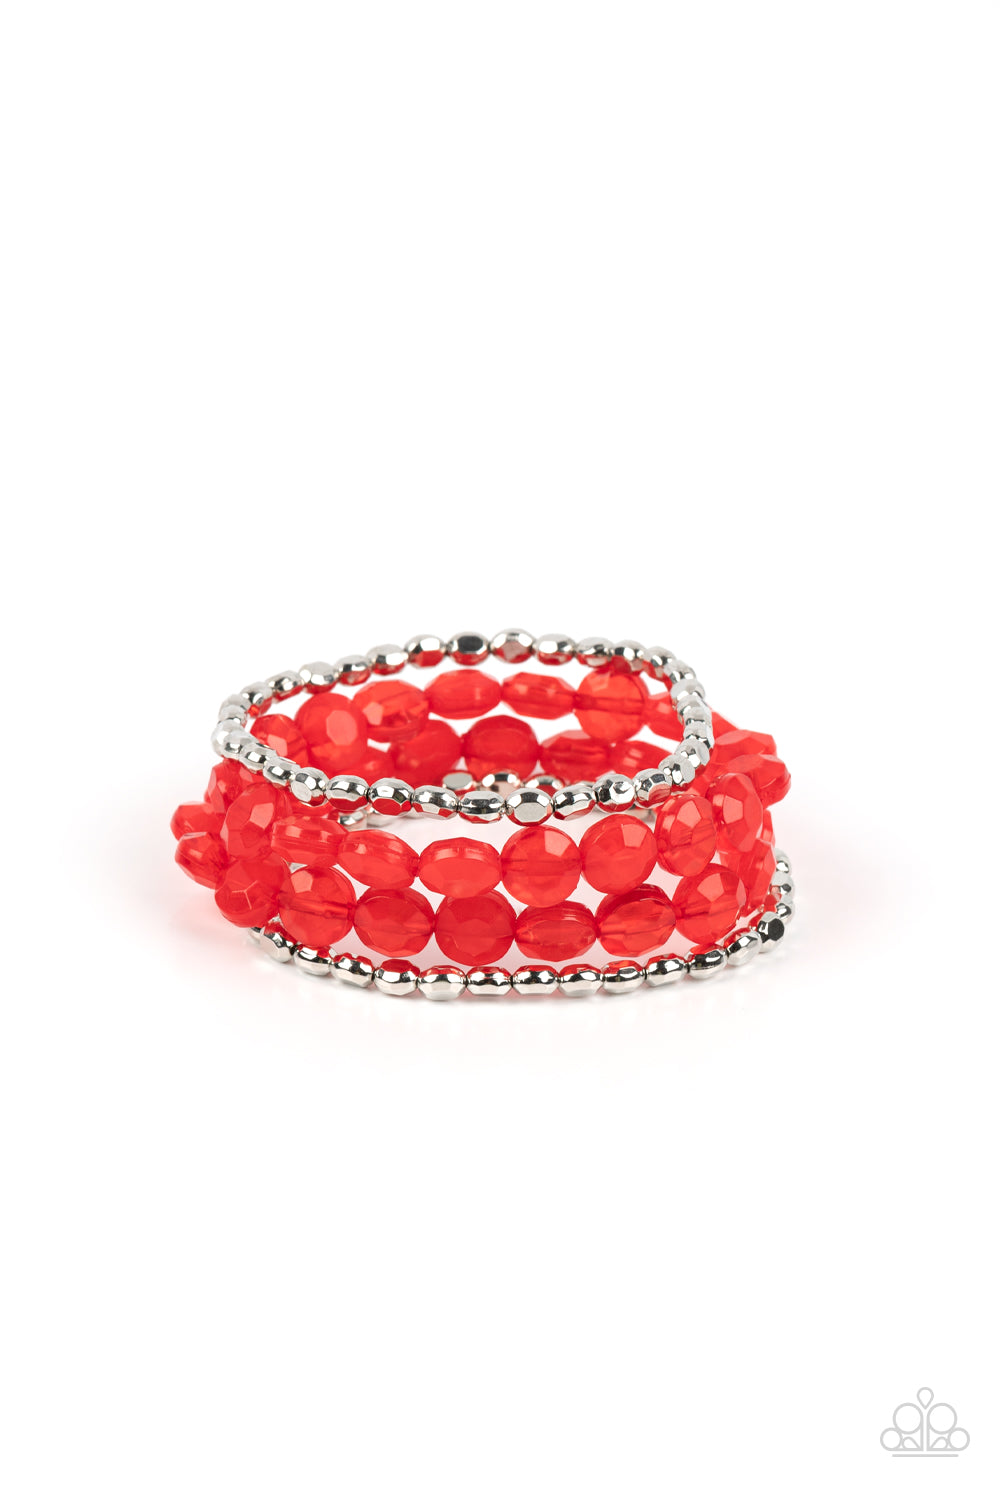 Seaside Siesta - Red Bracelet - Paparazzi Accessories